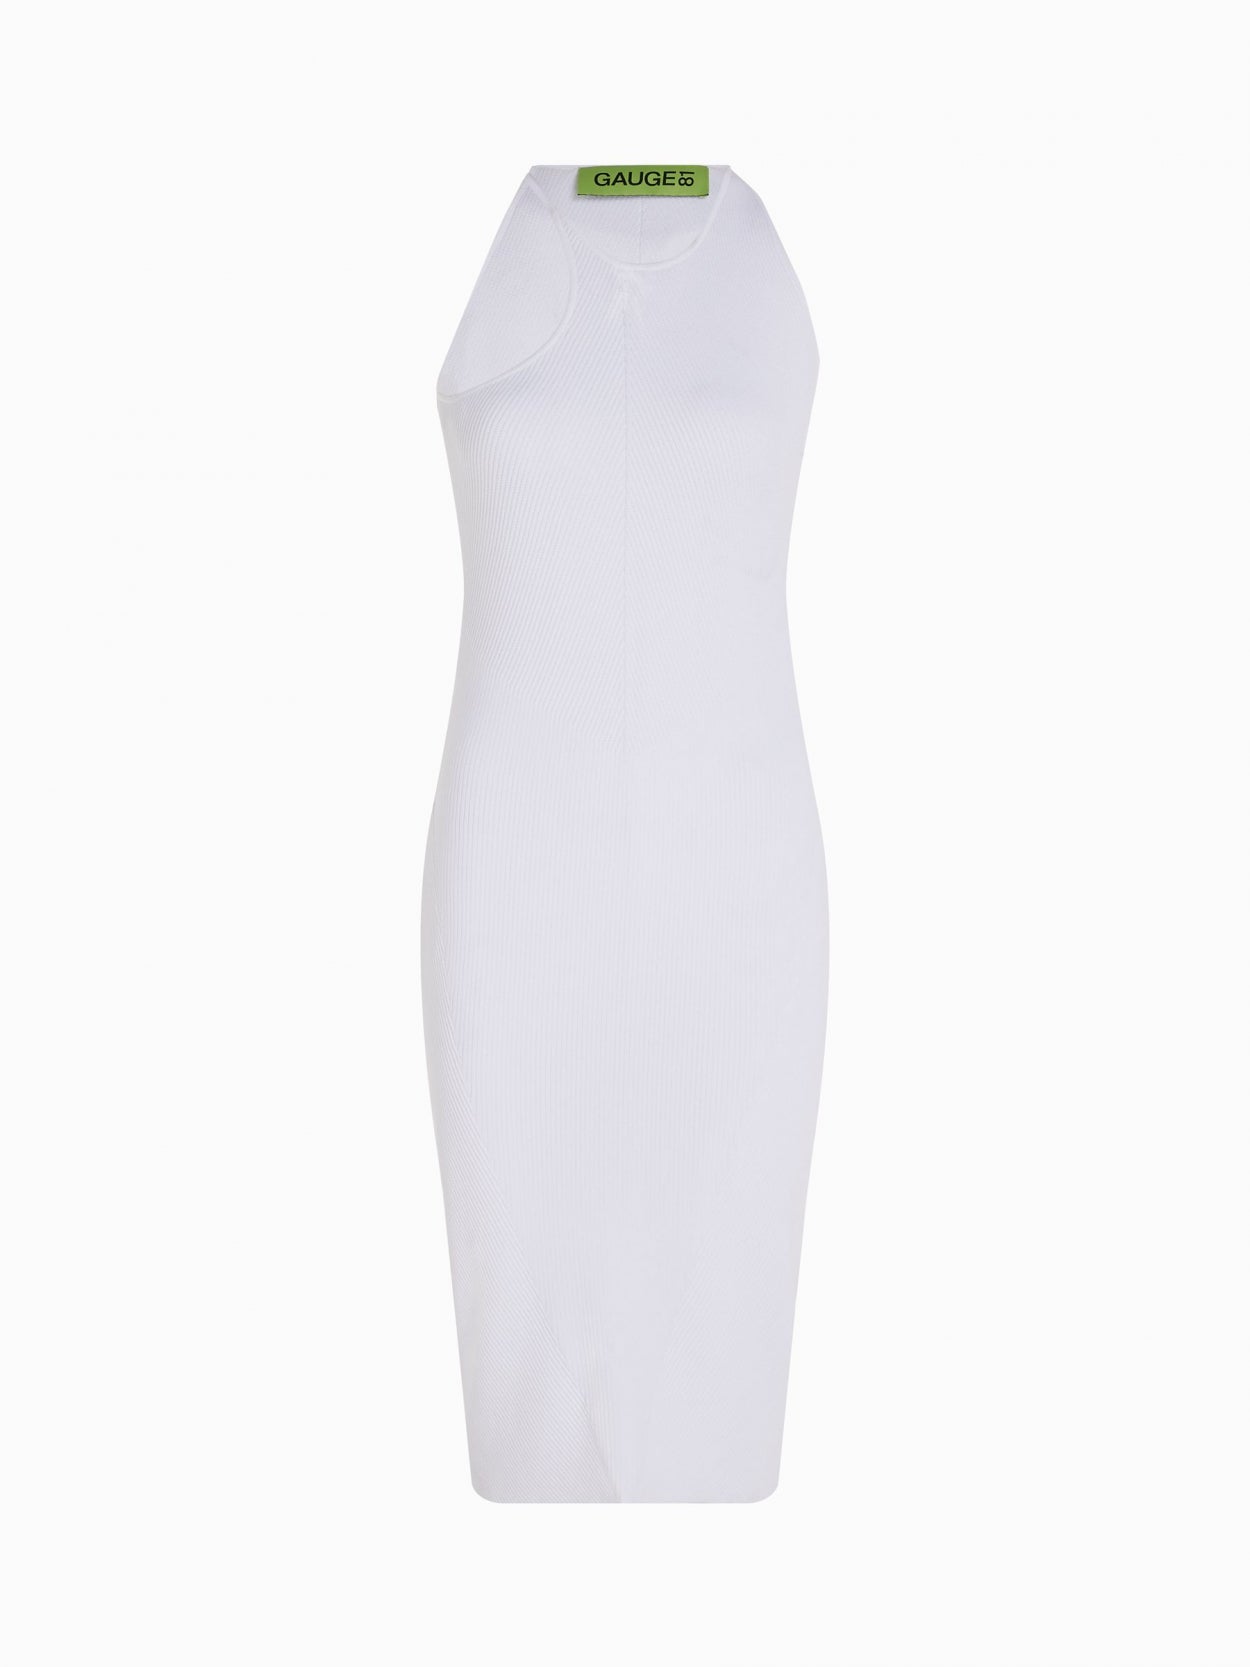 front packshot of an asymmetric white midi dress